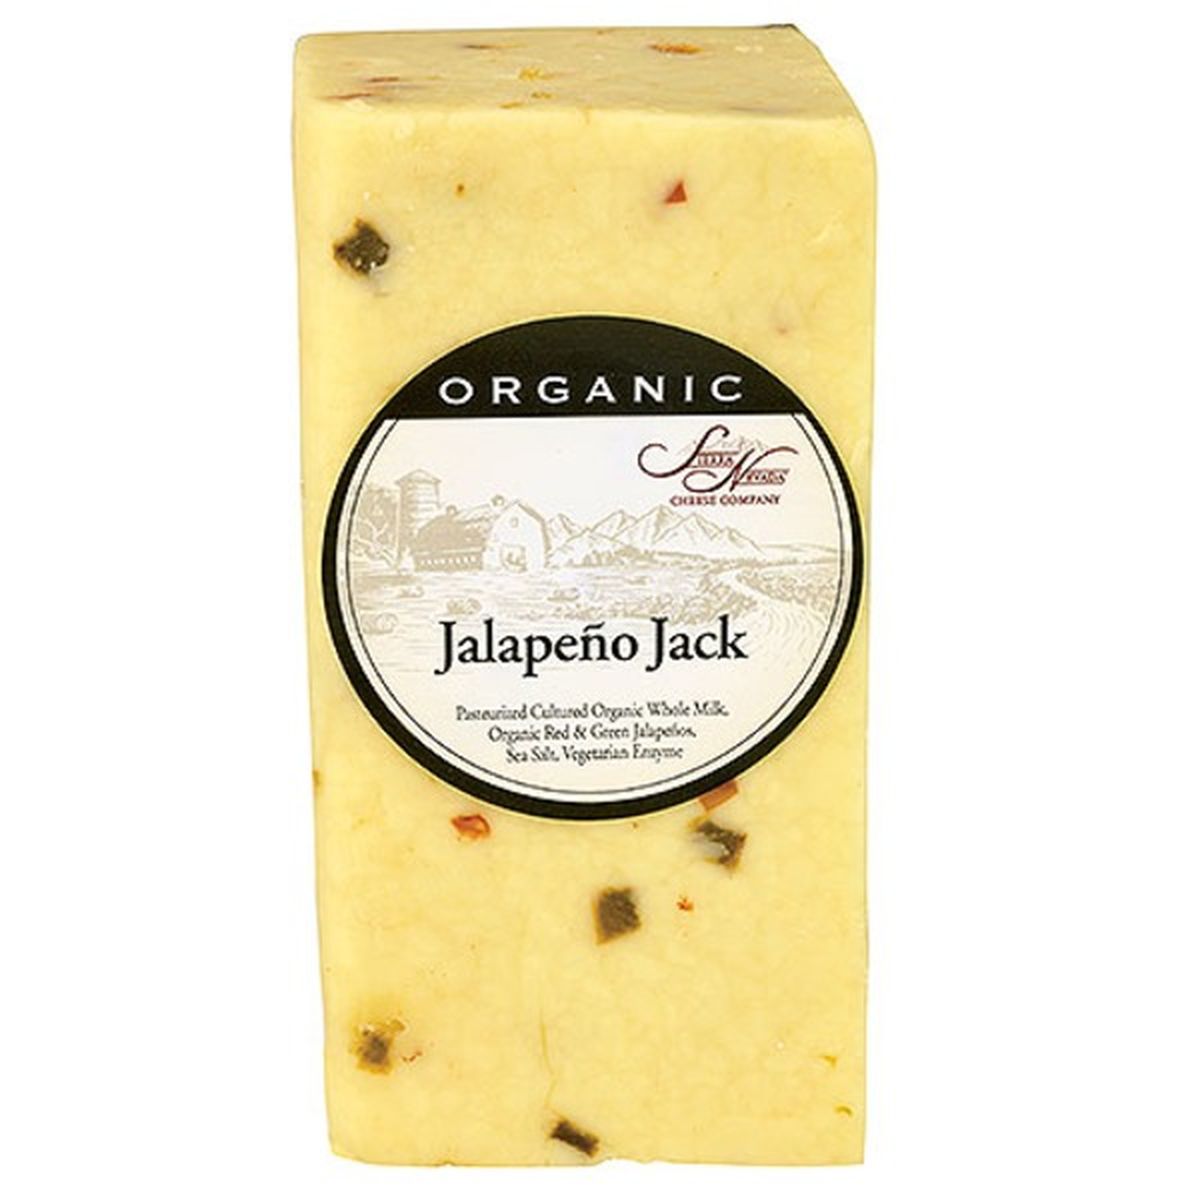 Calories in Sierra Nevada Organic Jalapeno Jack Cheese